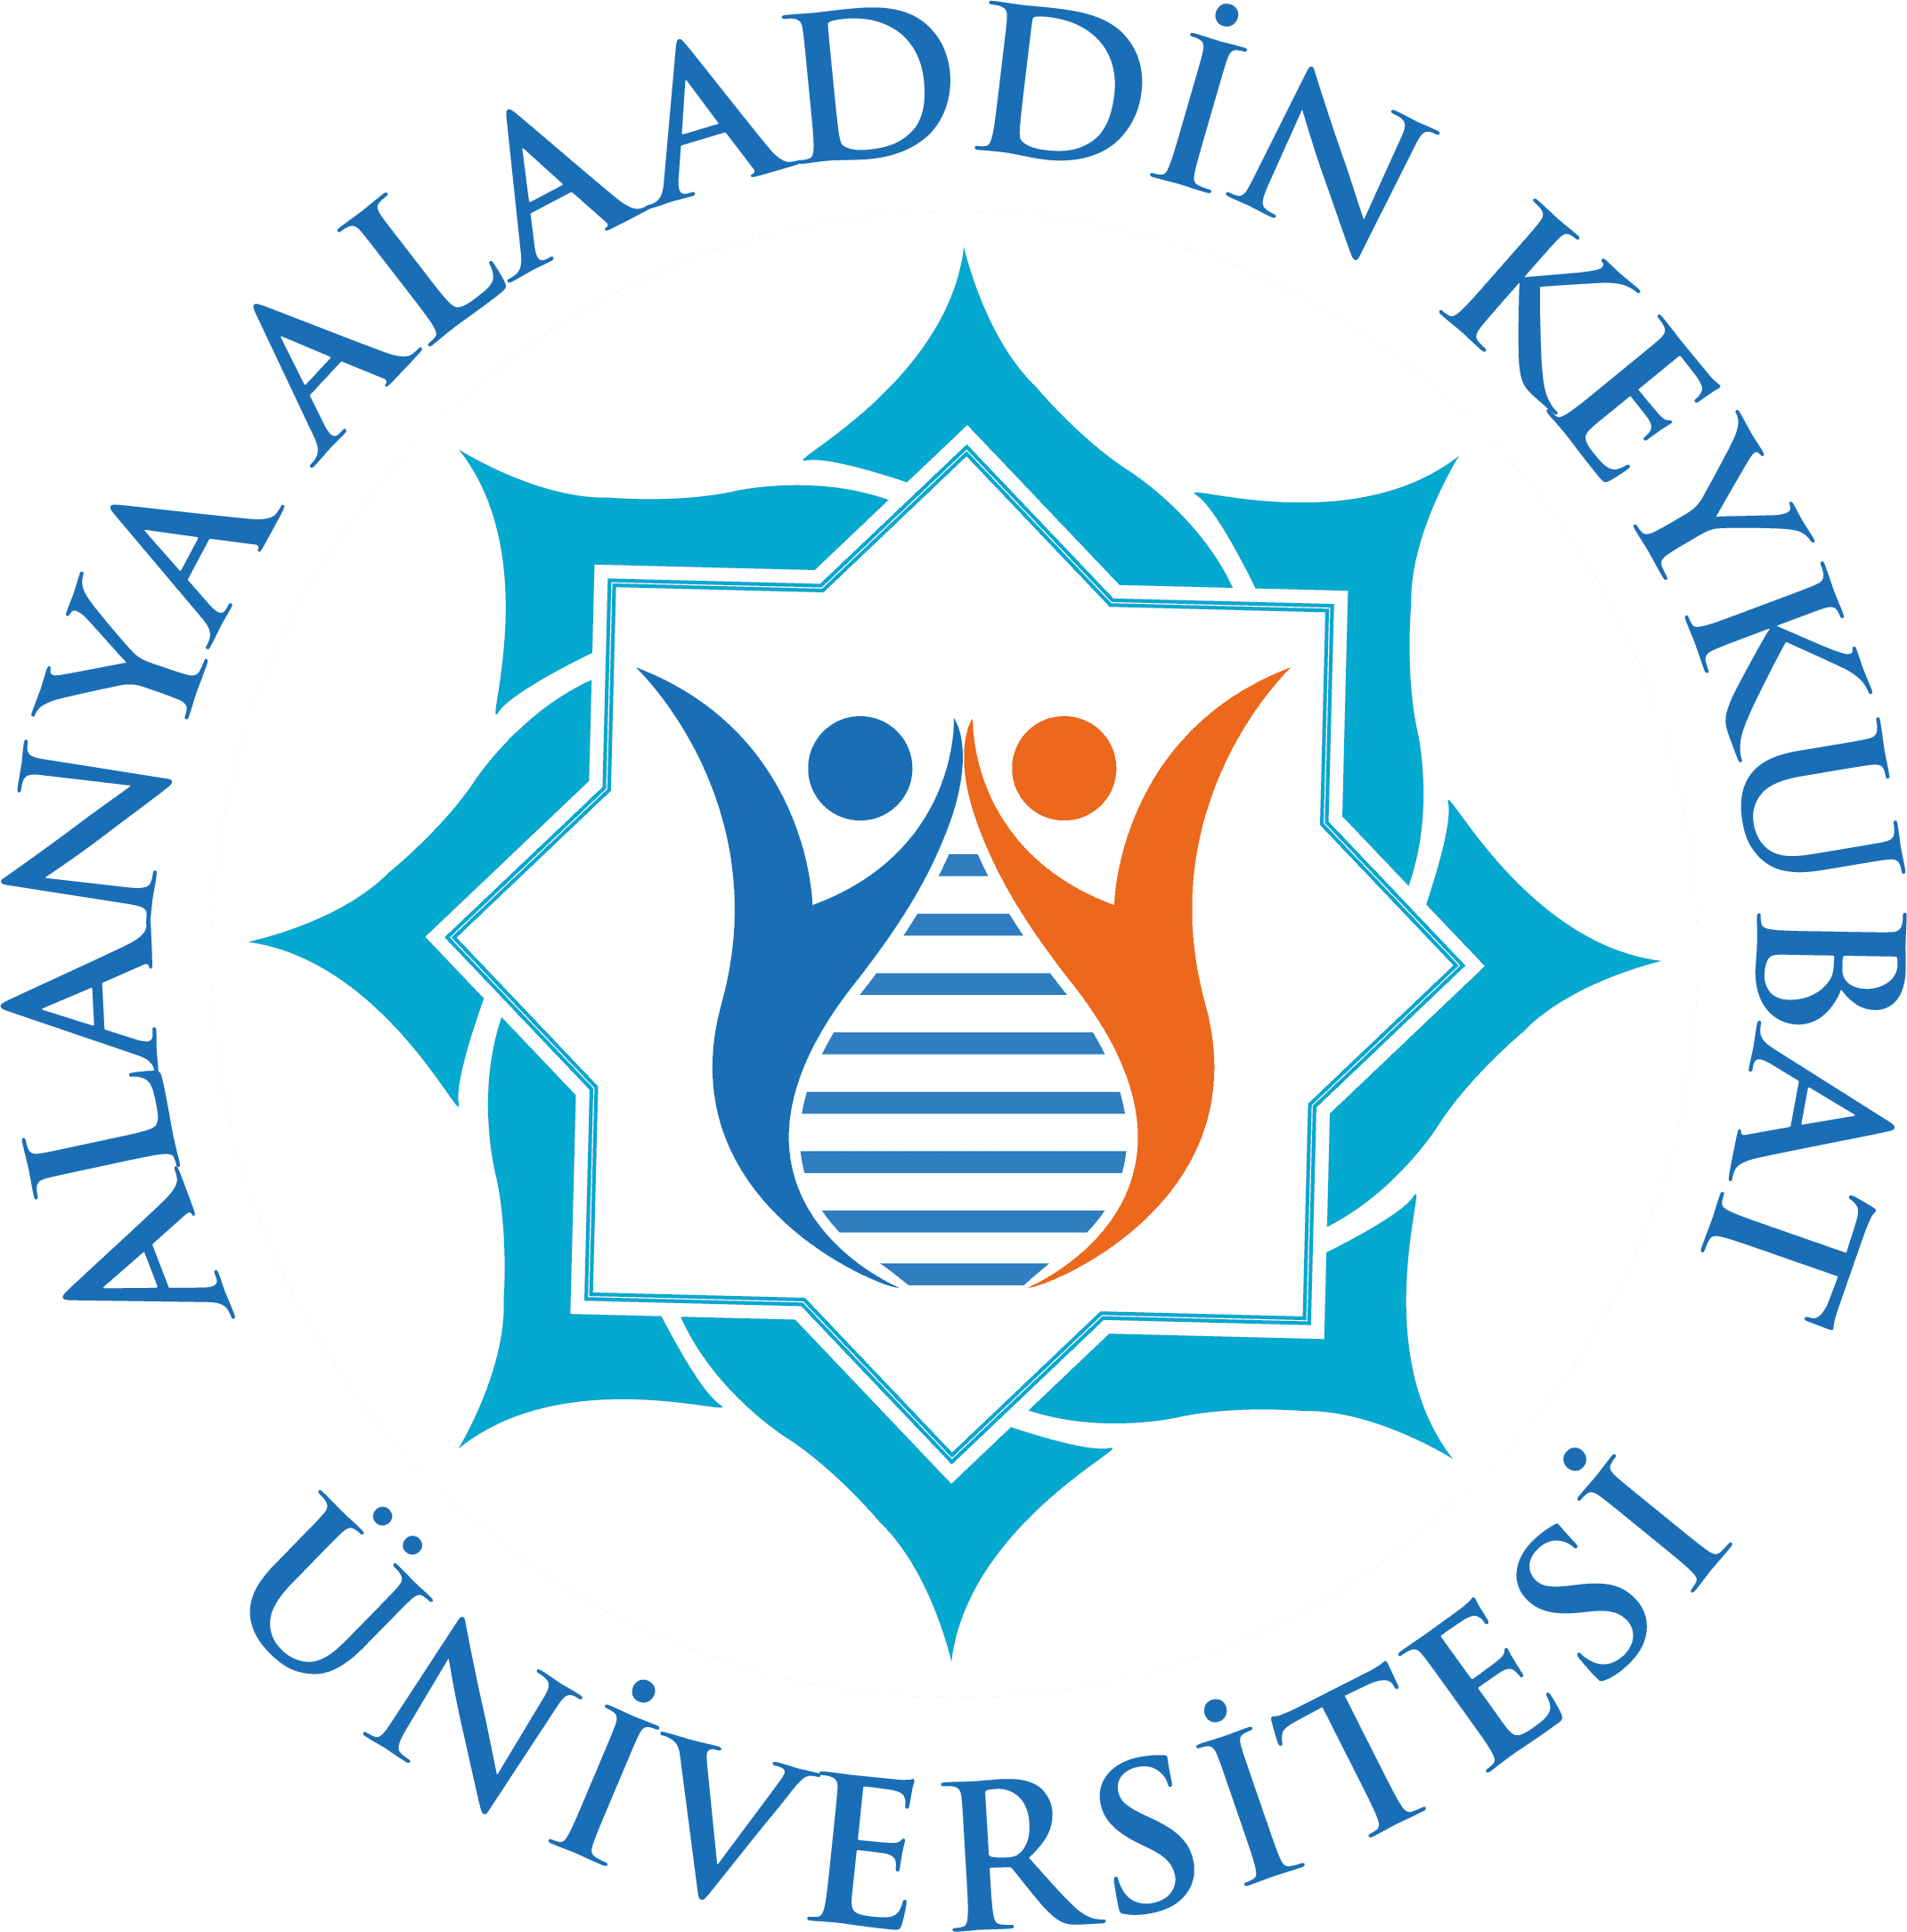 Alanya Alaaddin Keykubat Üniversitesi Logo